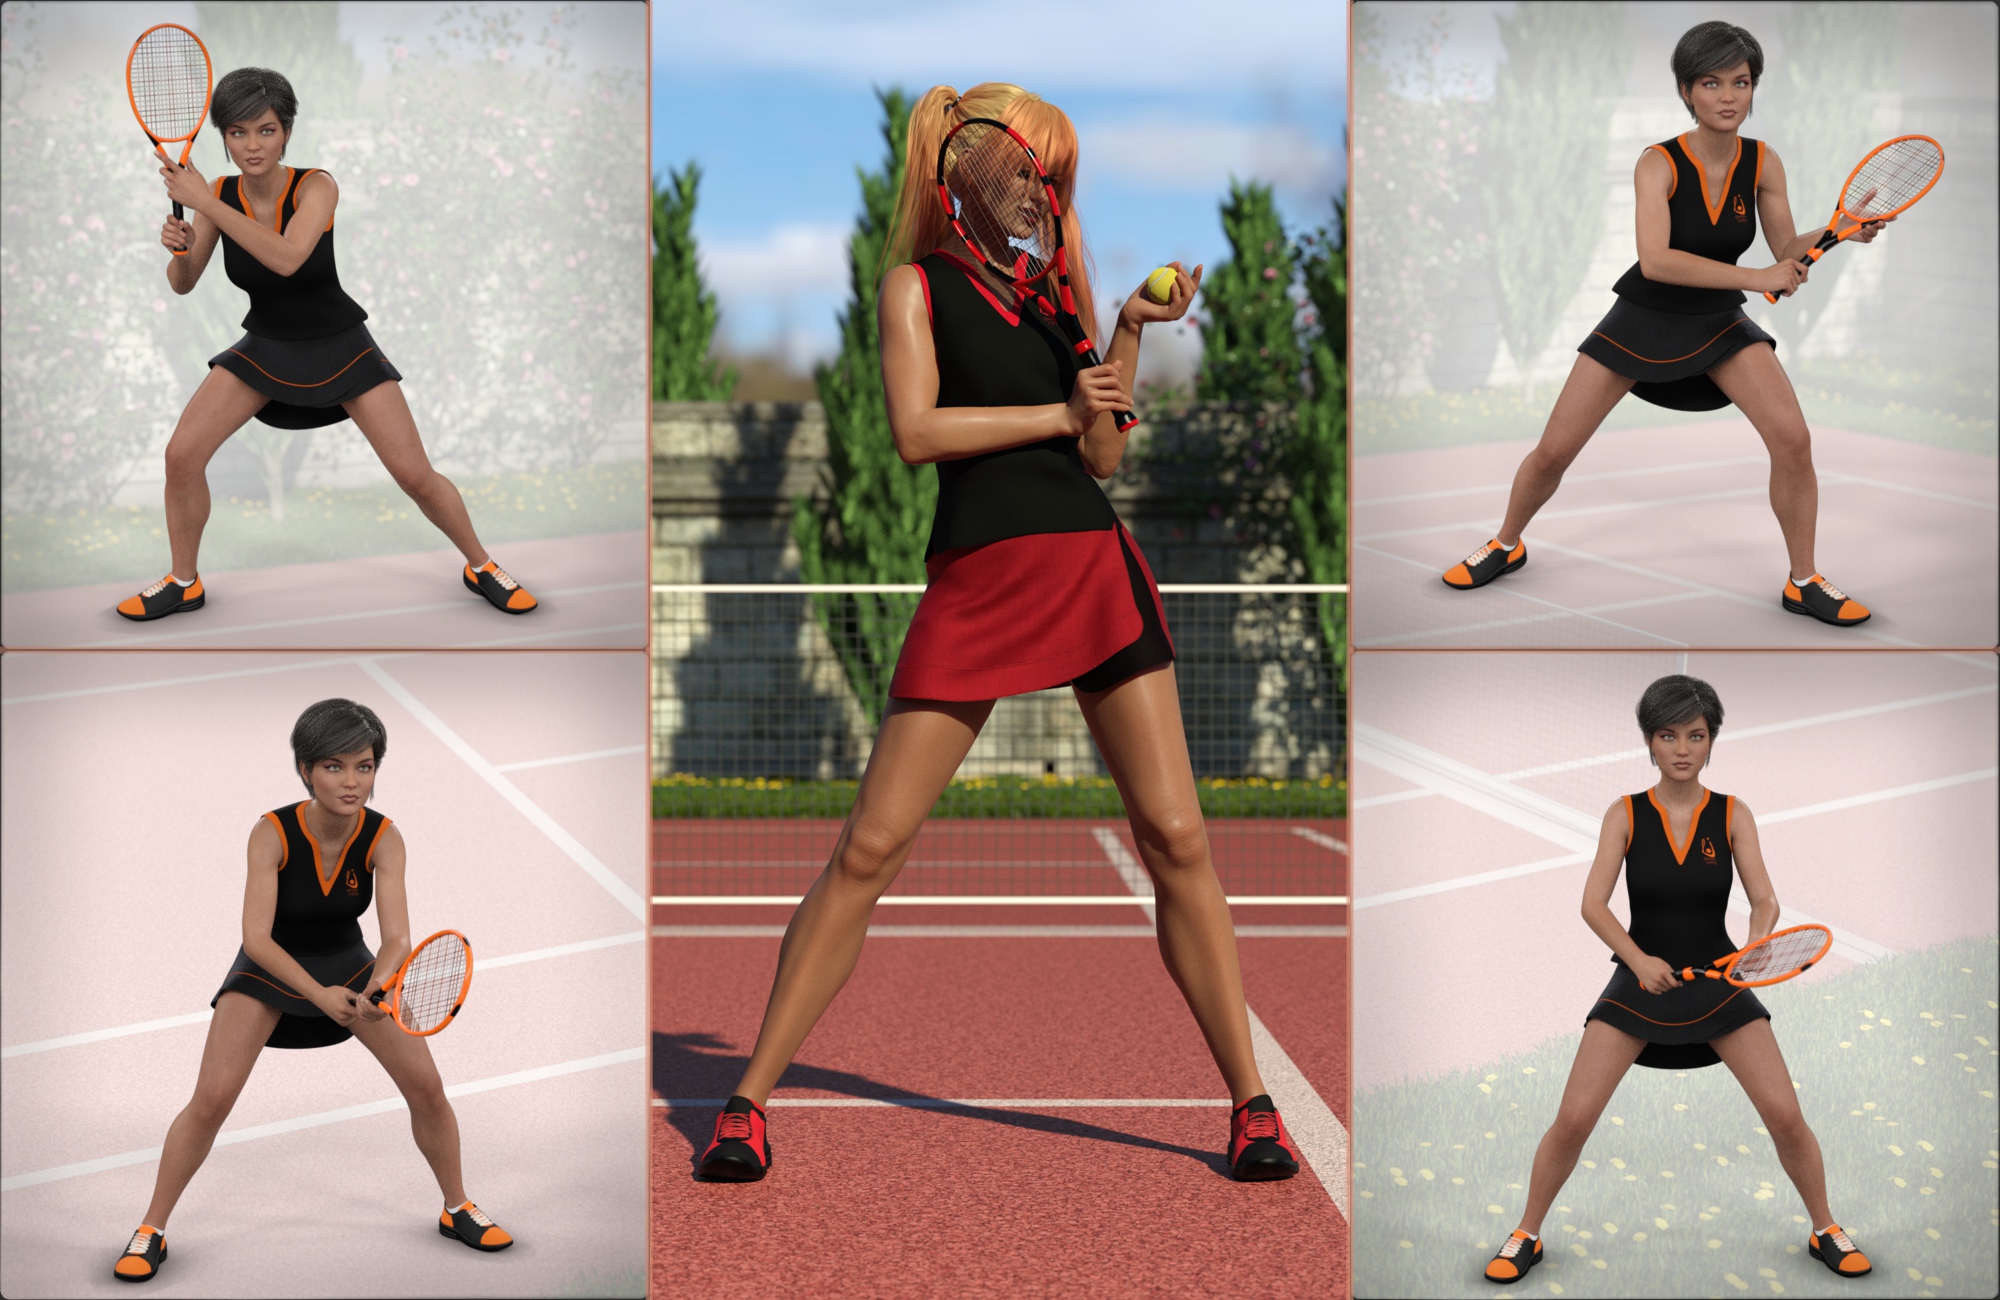 tennis poses zbrush